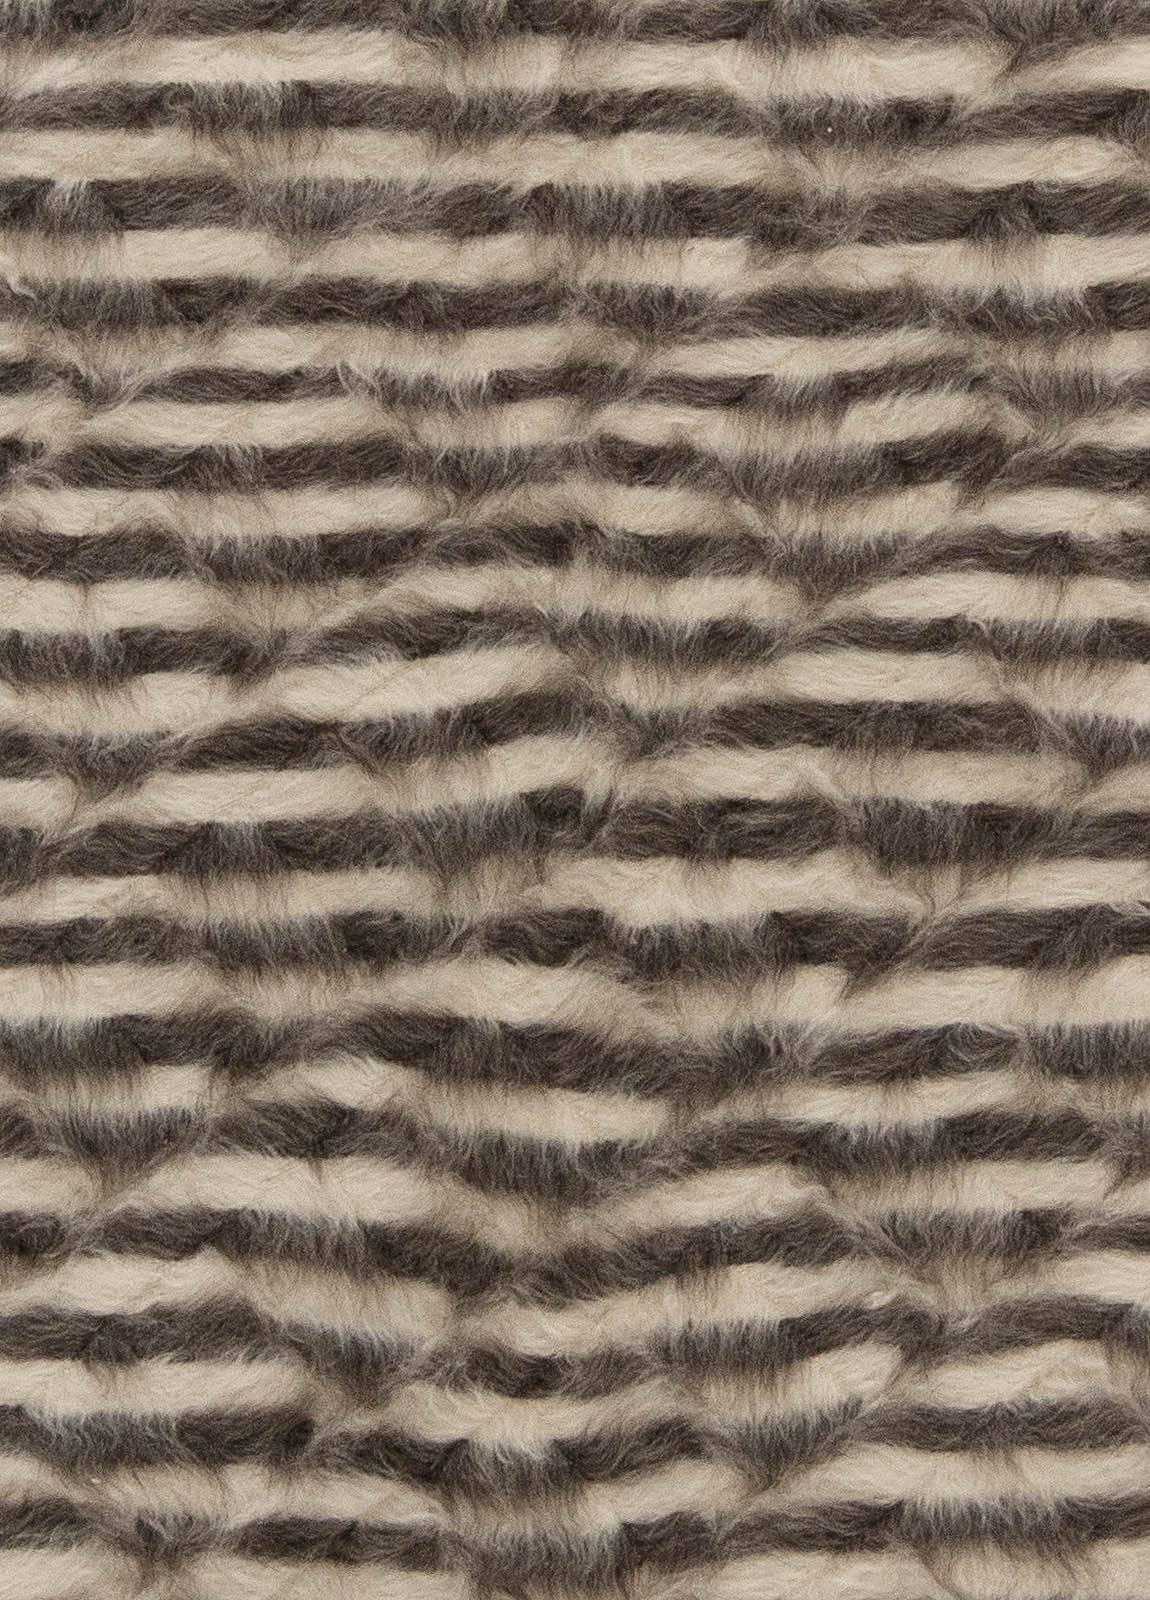 Taurus collection modern striped goat hair rug by Doris Leslie Blau
Size: 6'0